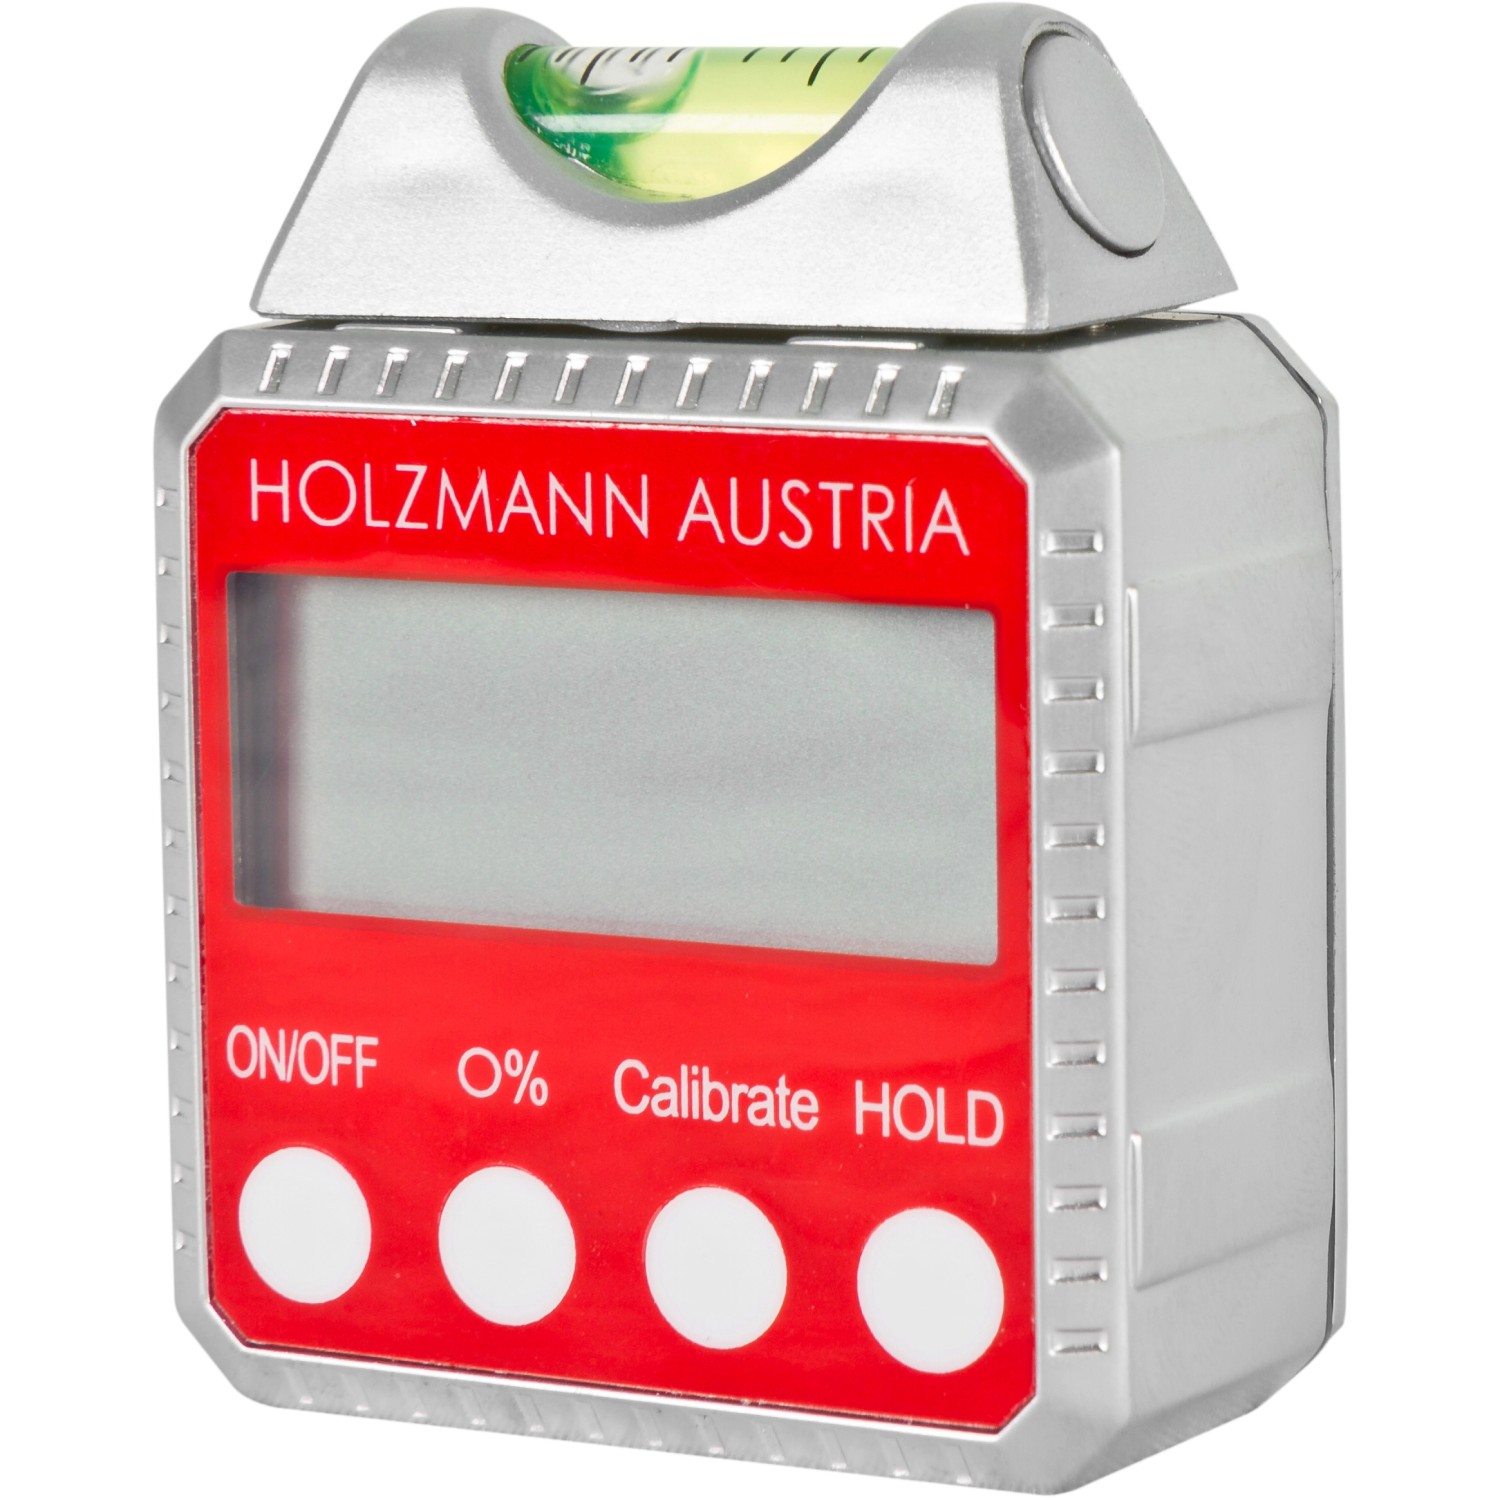 Holzmann Digitaler Winkelmesser DWM90 kaufen bei OBI